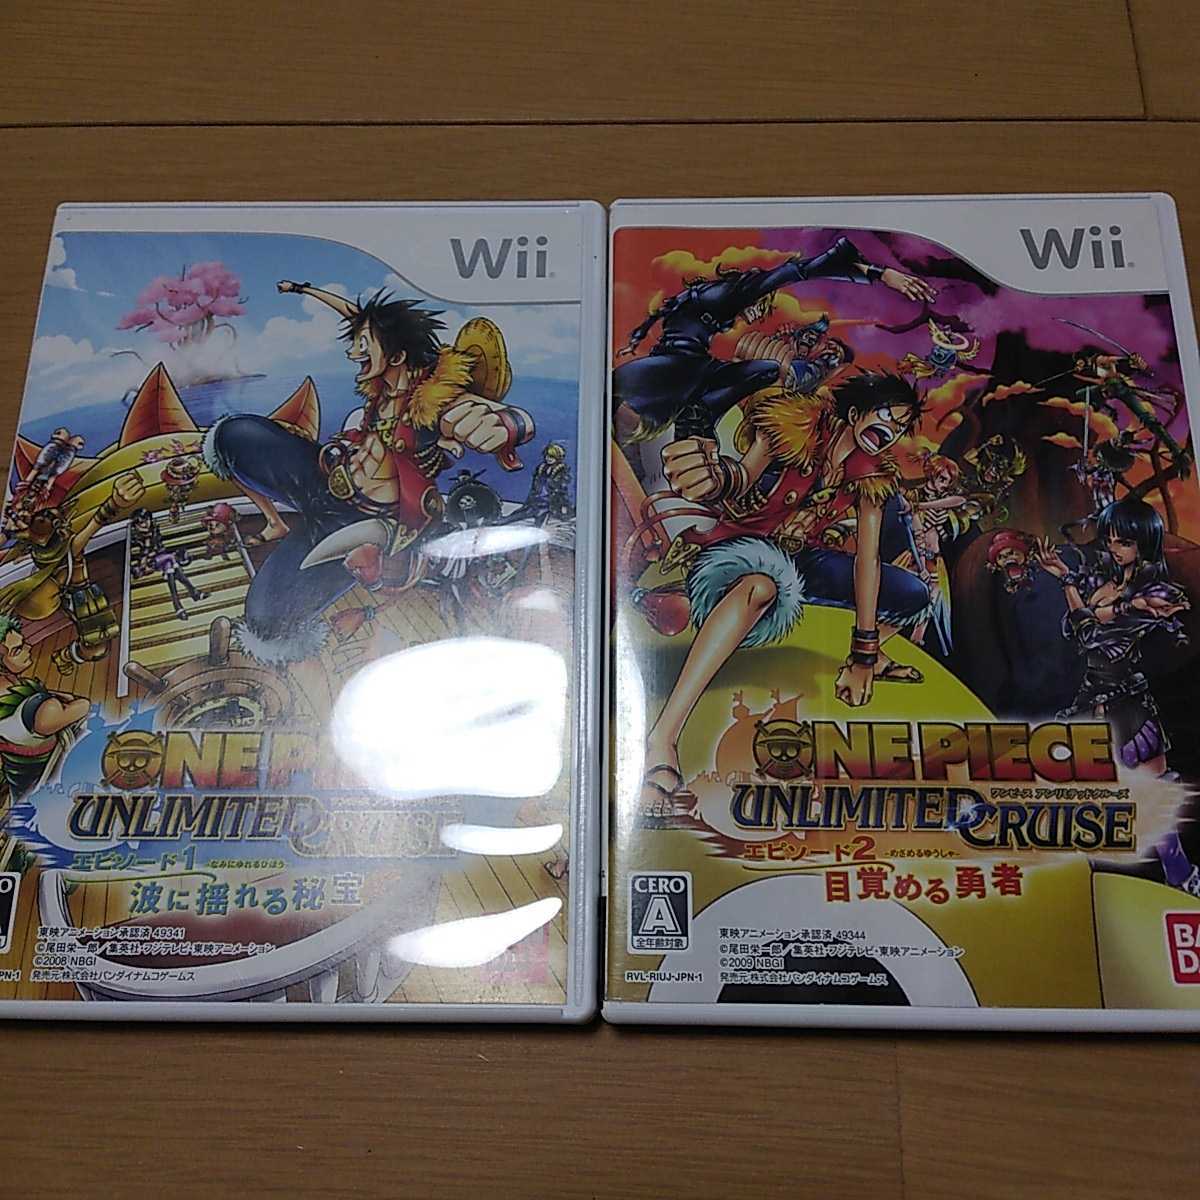 Paypayフリマ Wii ワンピース One Piece Unlimited Cruise エピソード 1 2 波に揺れる秘宝 目覚める勇者 ２本 セット 中古 動作確認済